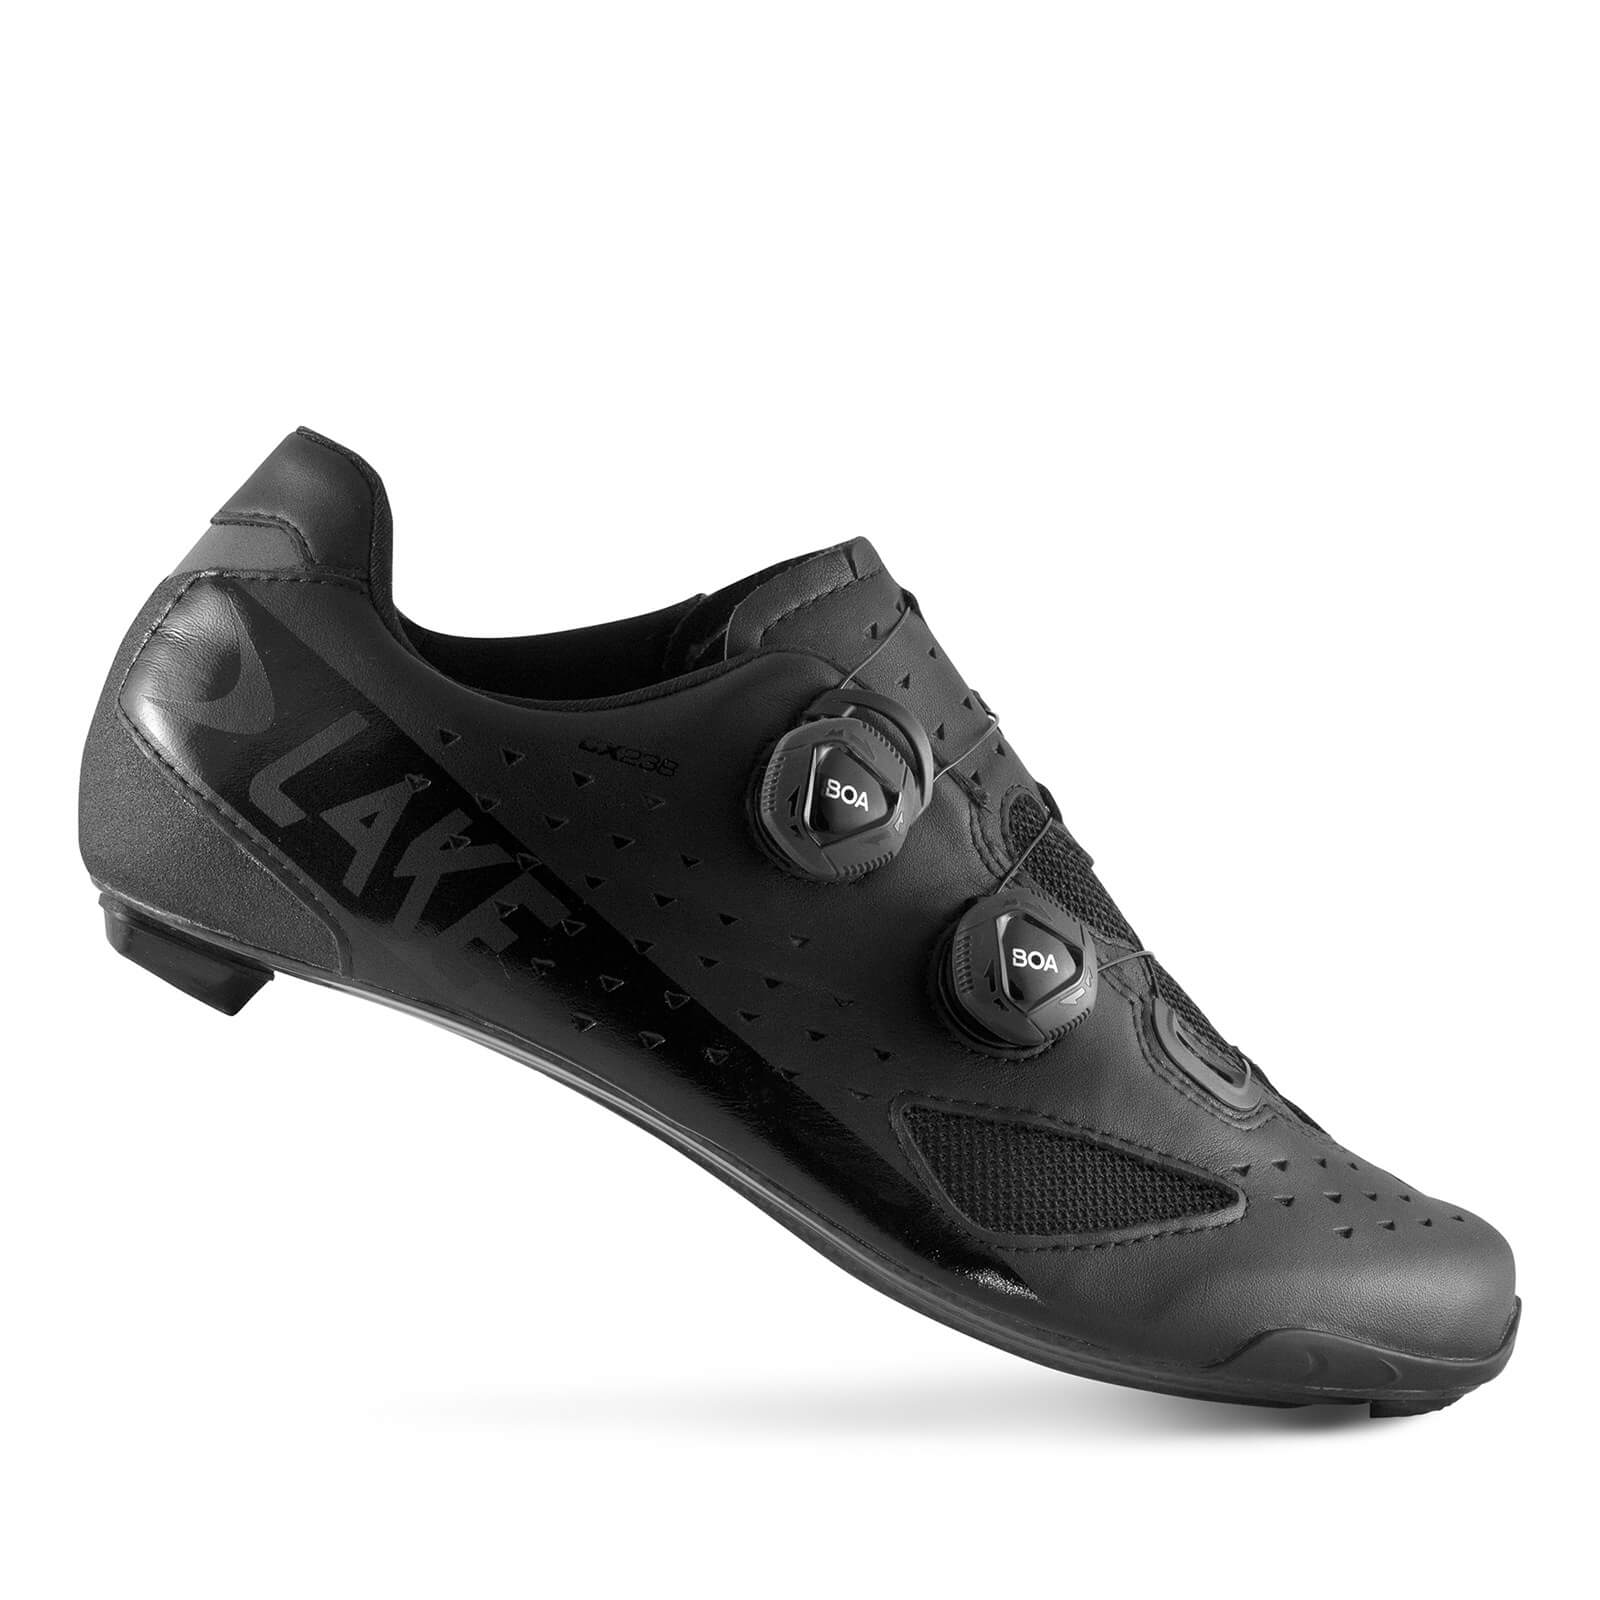 Lake CX238 Road Shoes - Wide Fit - EU42 - Black